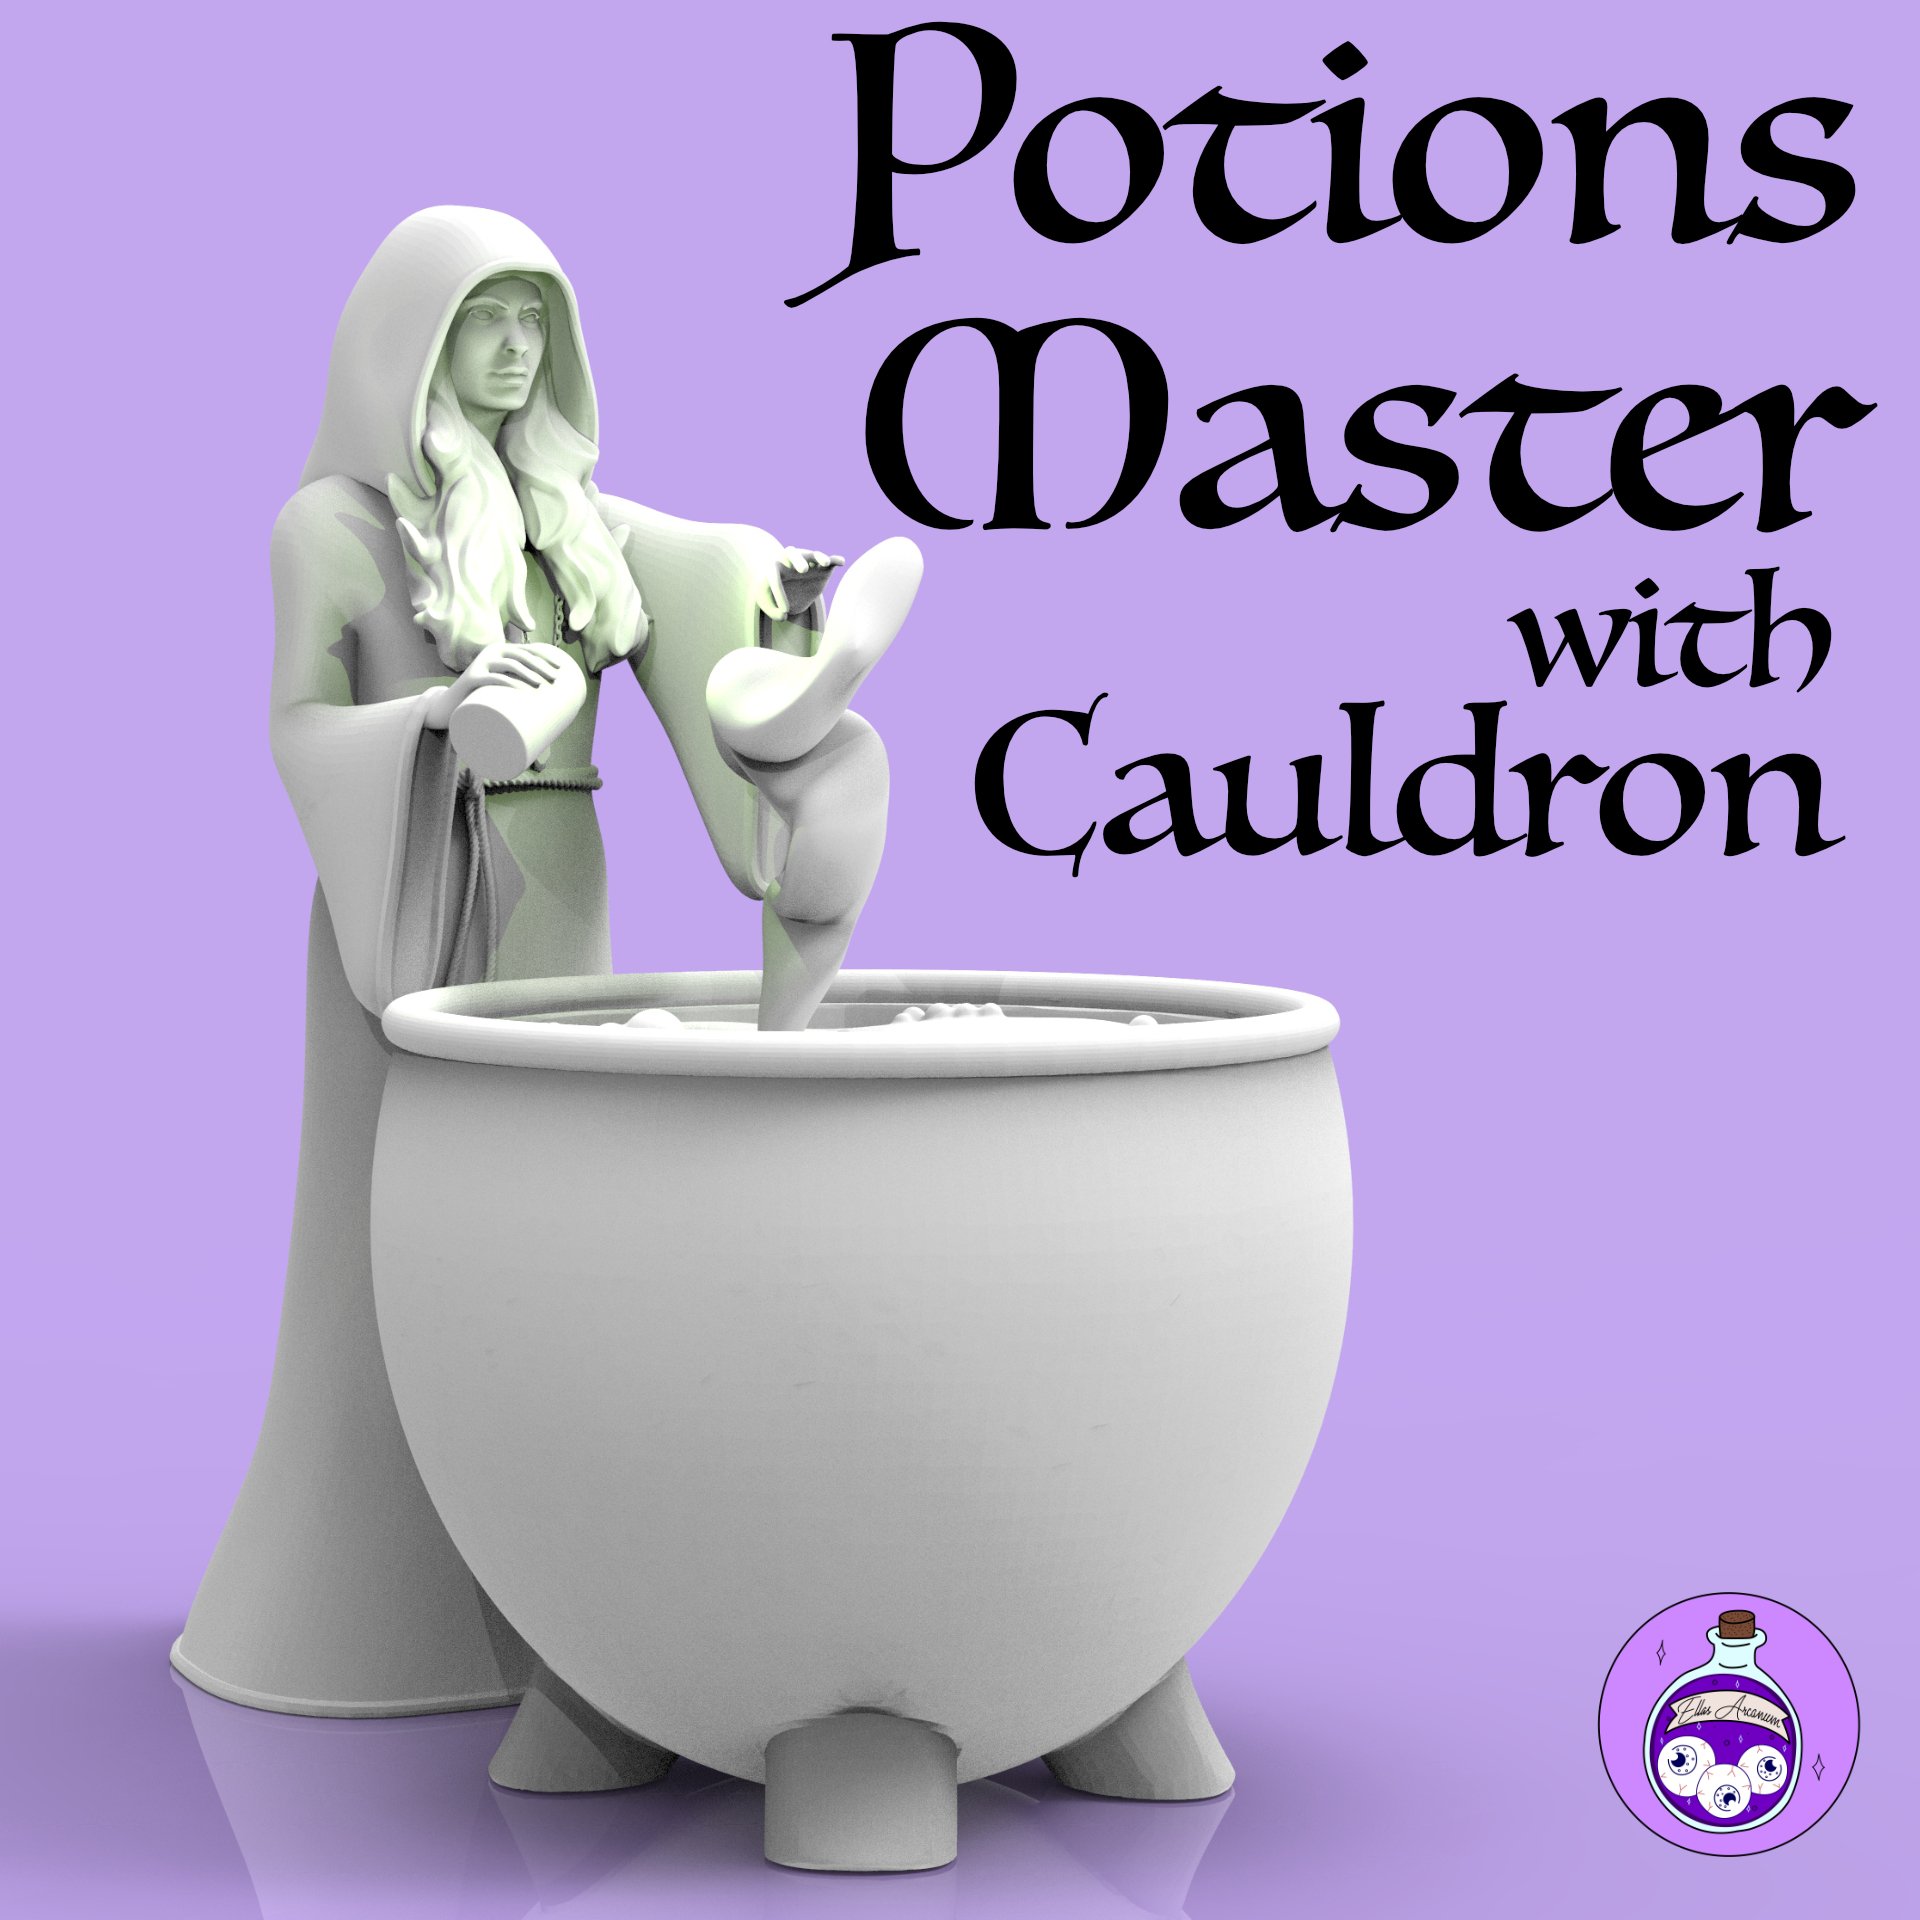 Potions Master with Cauldron.jpg